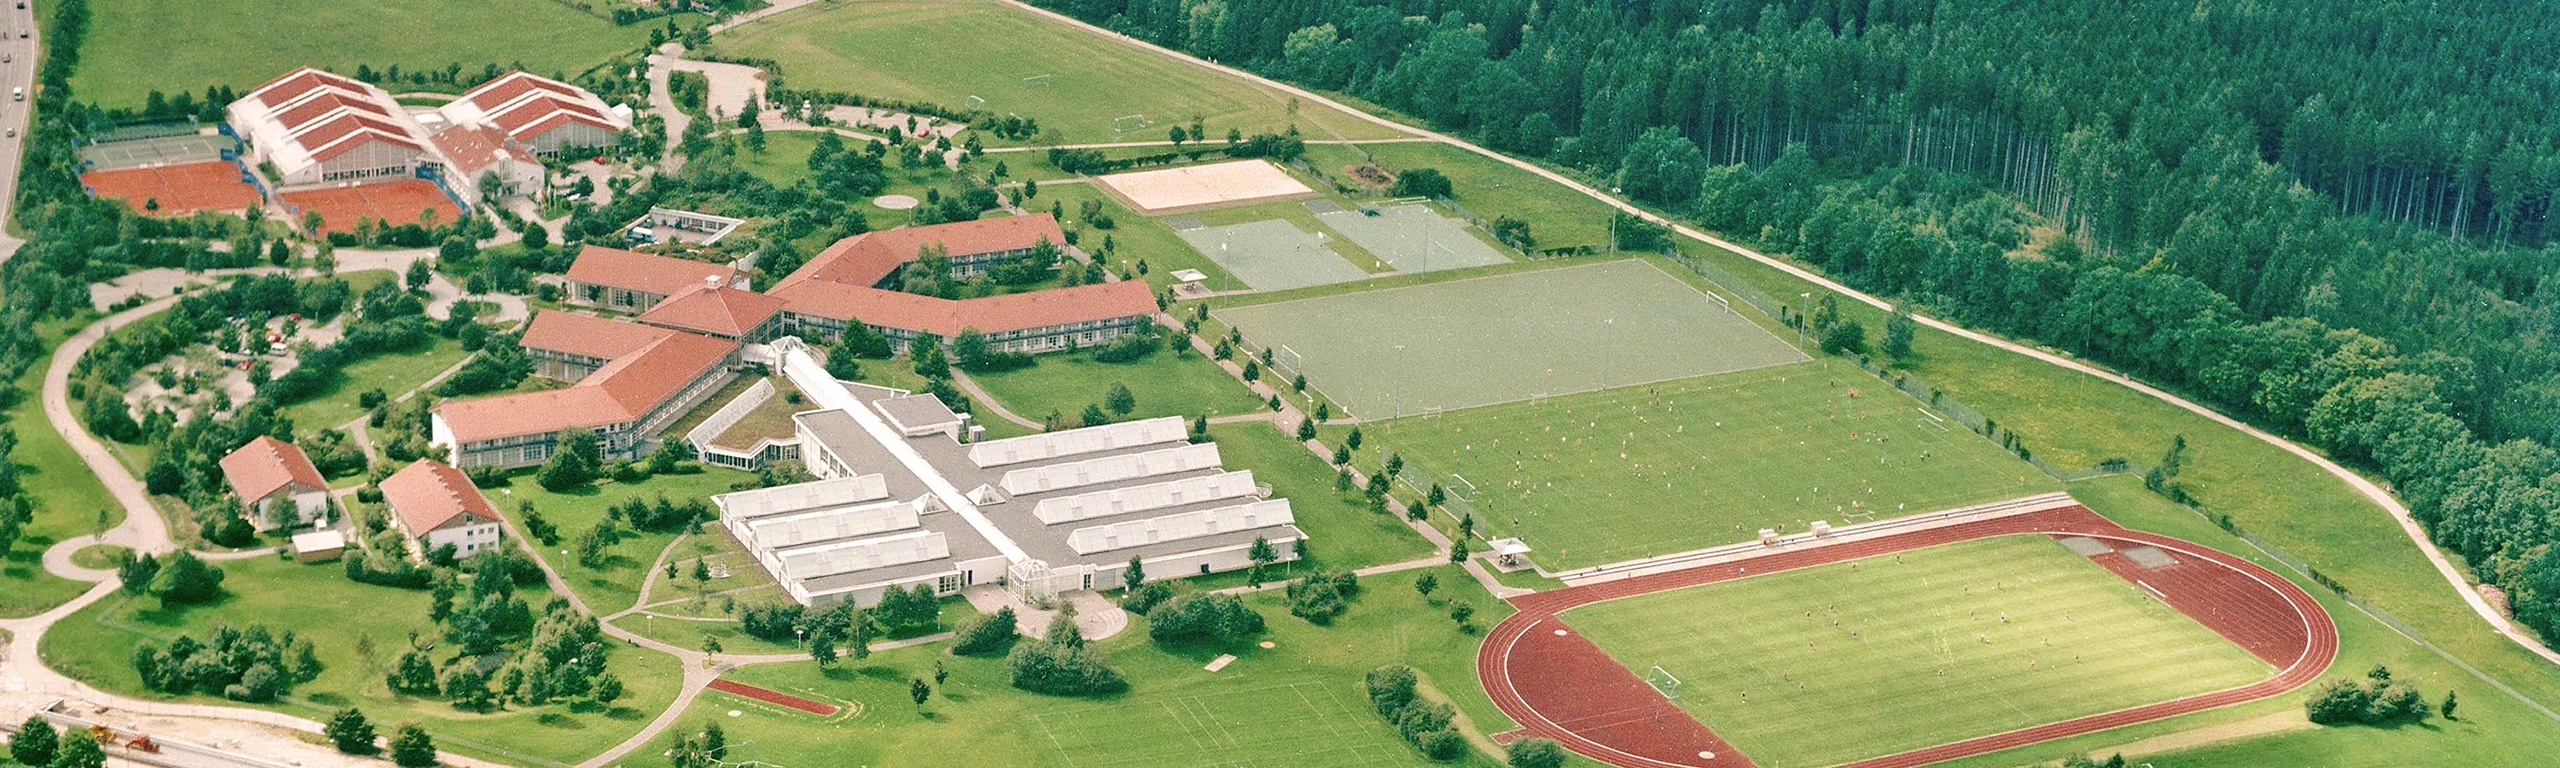 Sportschule Oberhaching – BFV Service GmbH